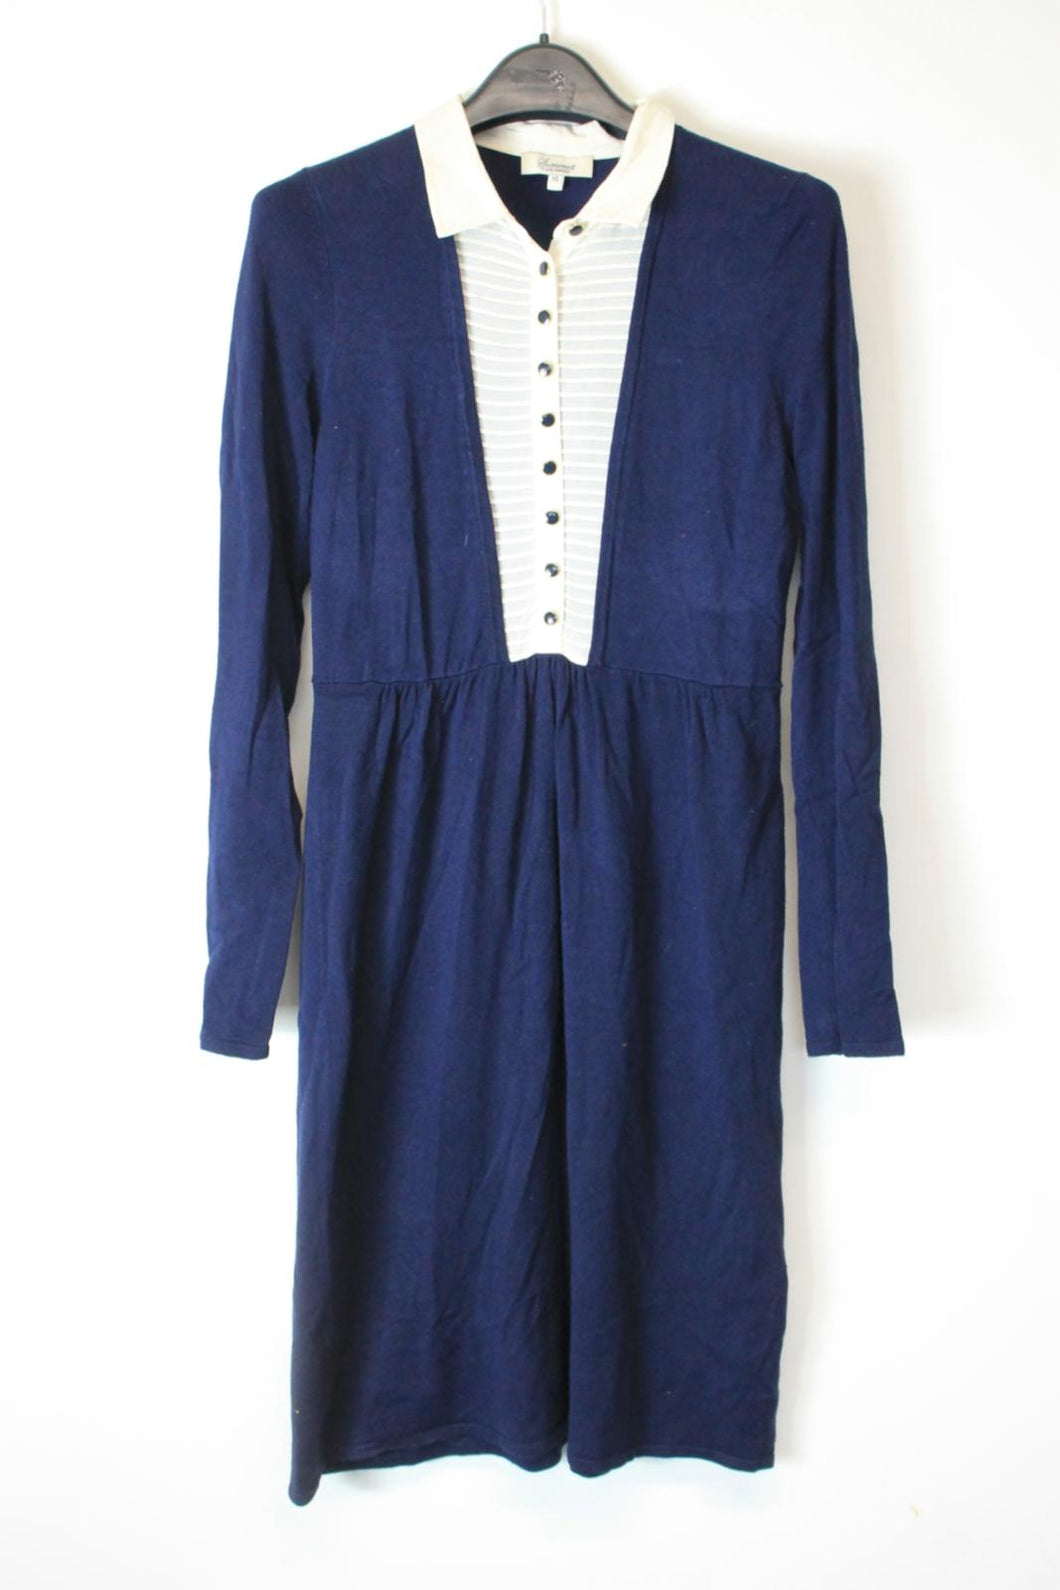 SOMERSET BY ALICE TEMPERLEY Ladies Navy Blue Knee Length Shirt Dress EU38 UK10